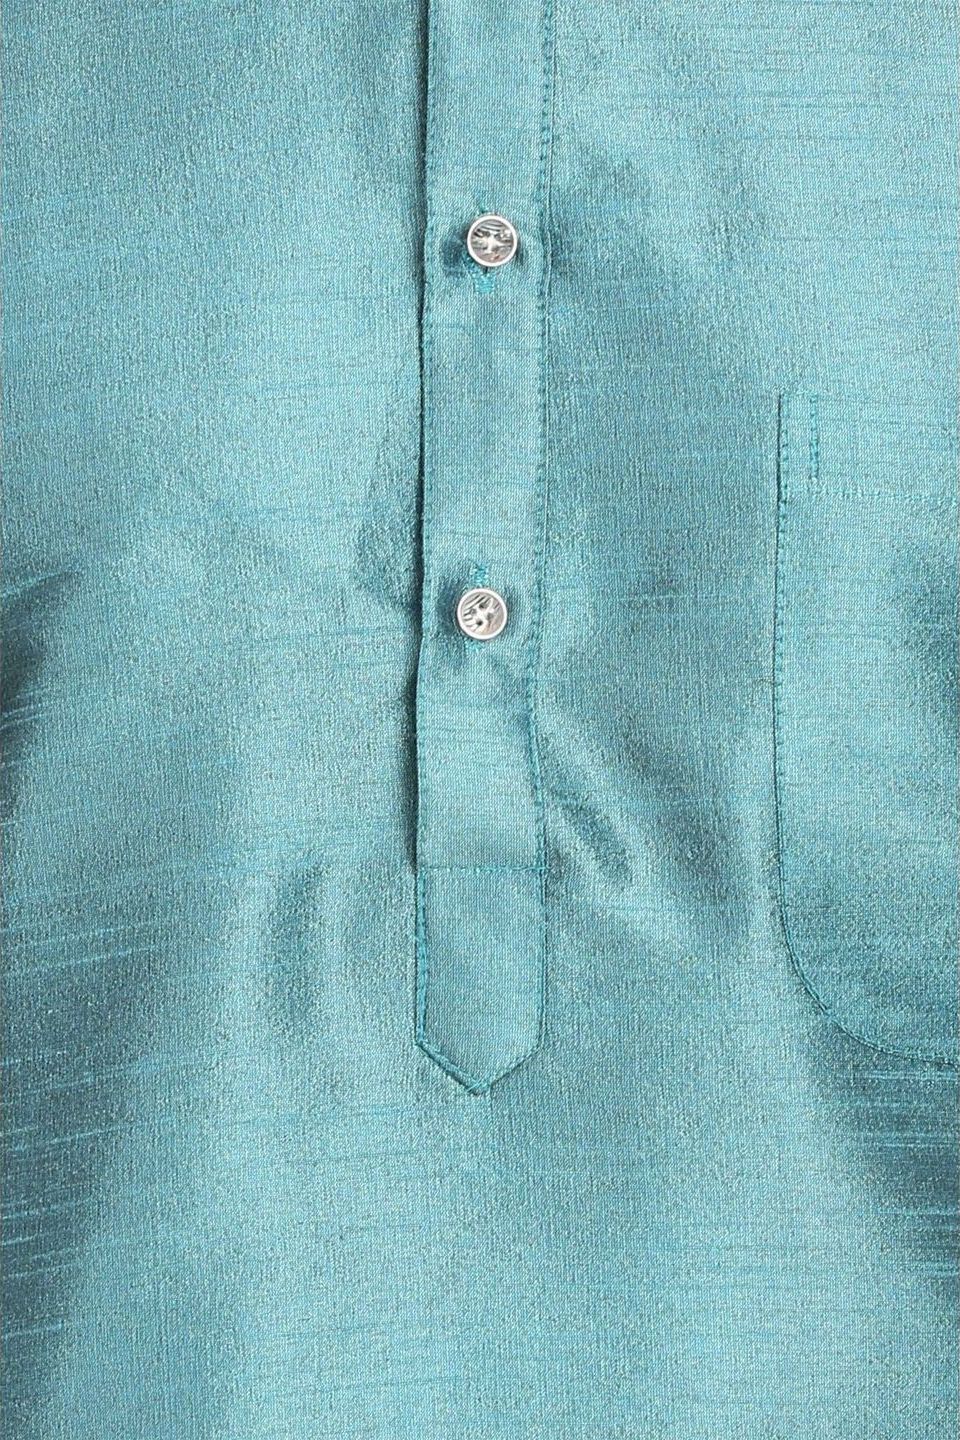 Banarasi Art Silk Turquoise Kurta Pyjama